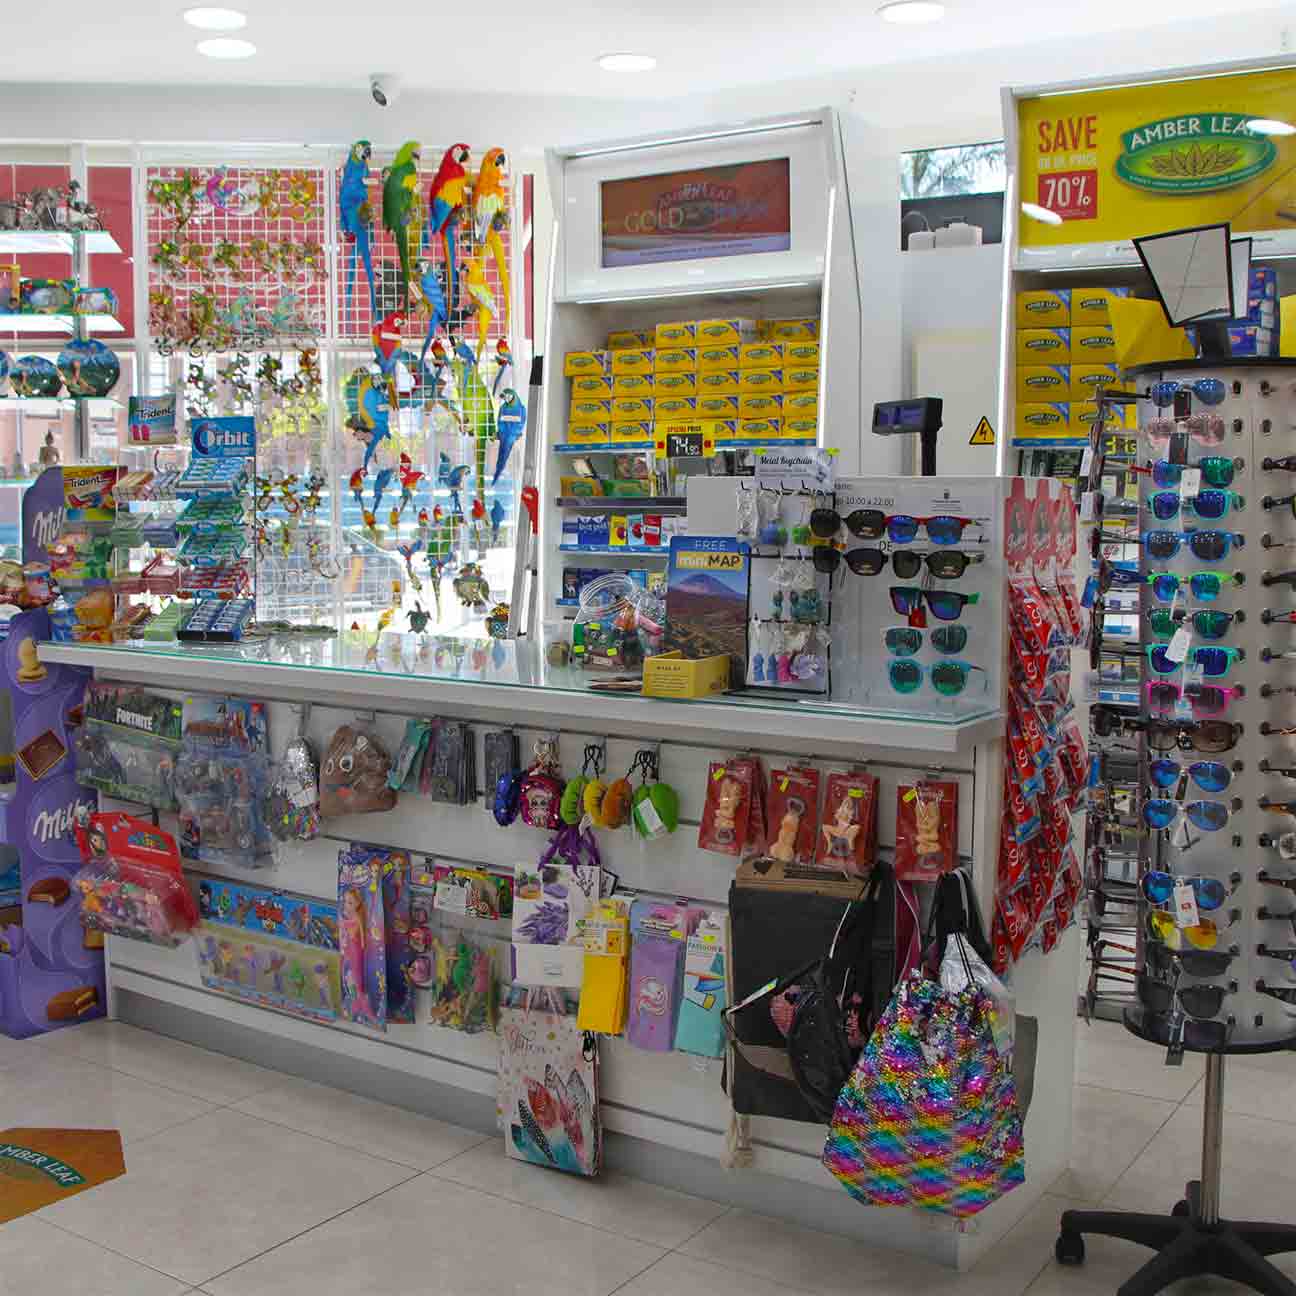 Tienda The Gift Shop 2 donde comprar souvenir